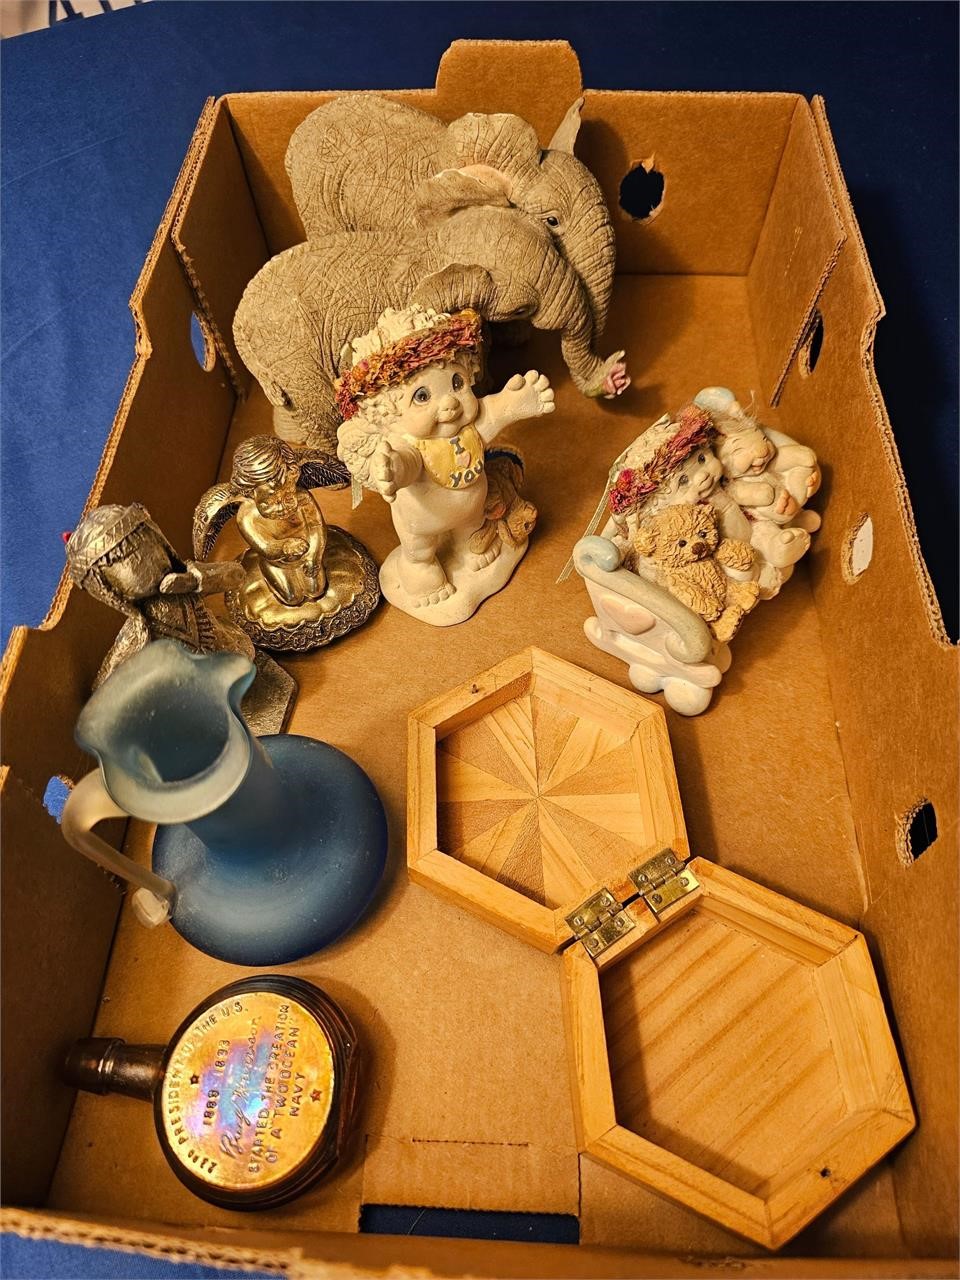 Pewter/Elephant figurine grab box